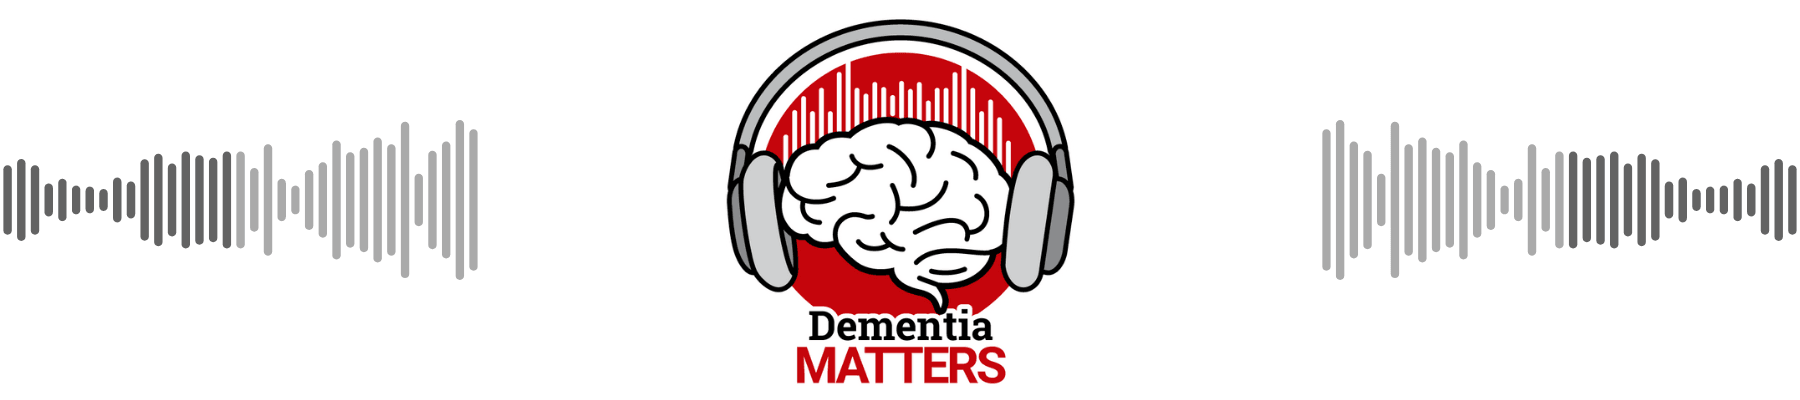 Dementia Matters Podcast logo